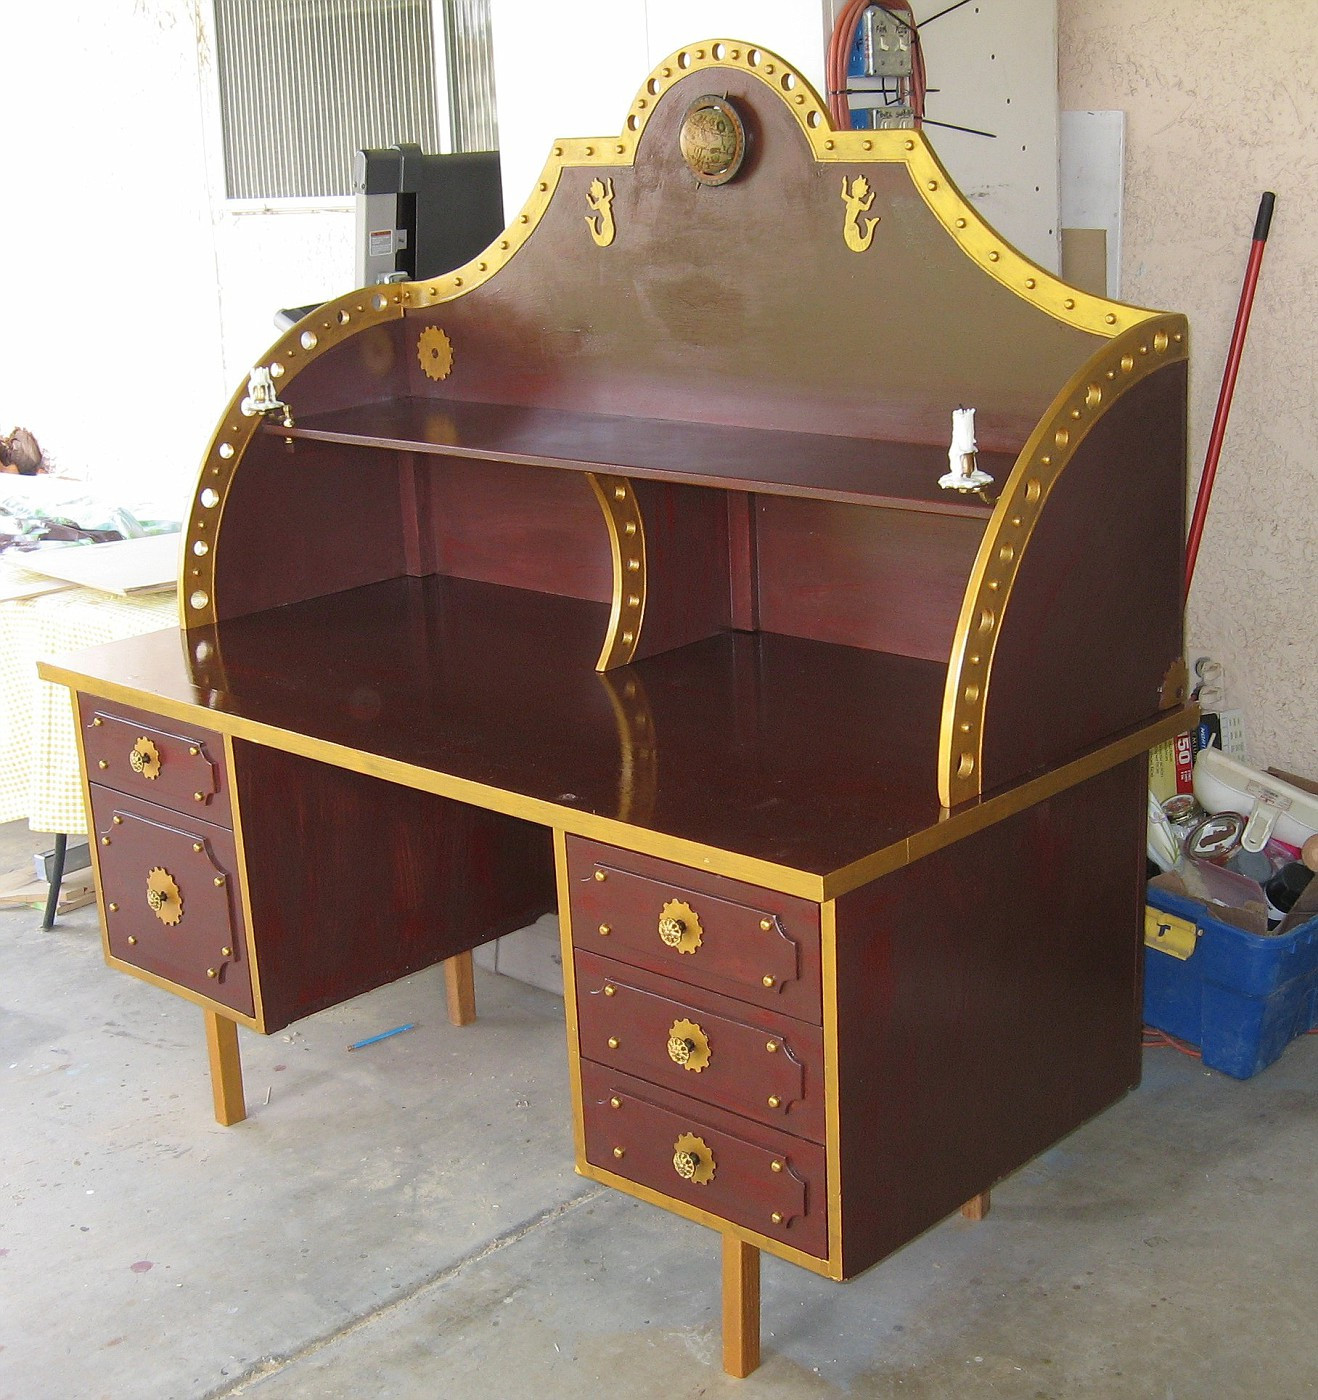 Best ideas about Steampunk Furniture DIY
. Save or Pin Steampunk Furniture designs Updated with Metamorphic Now.